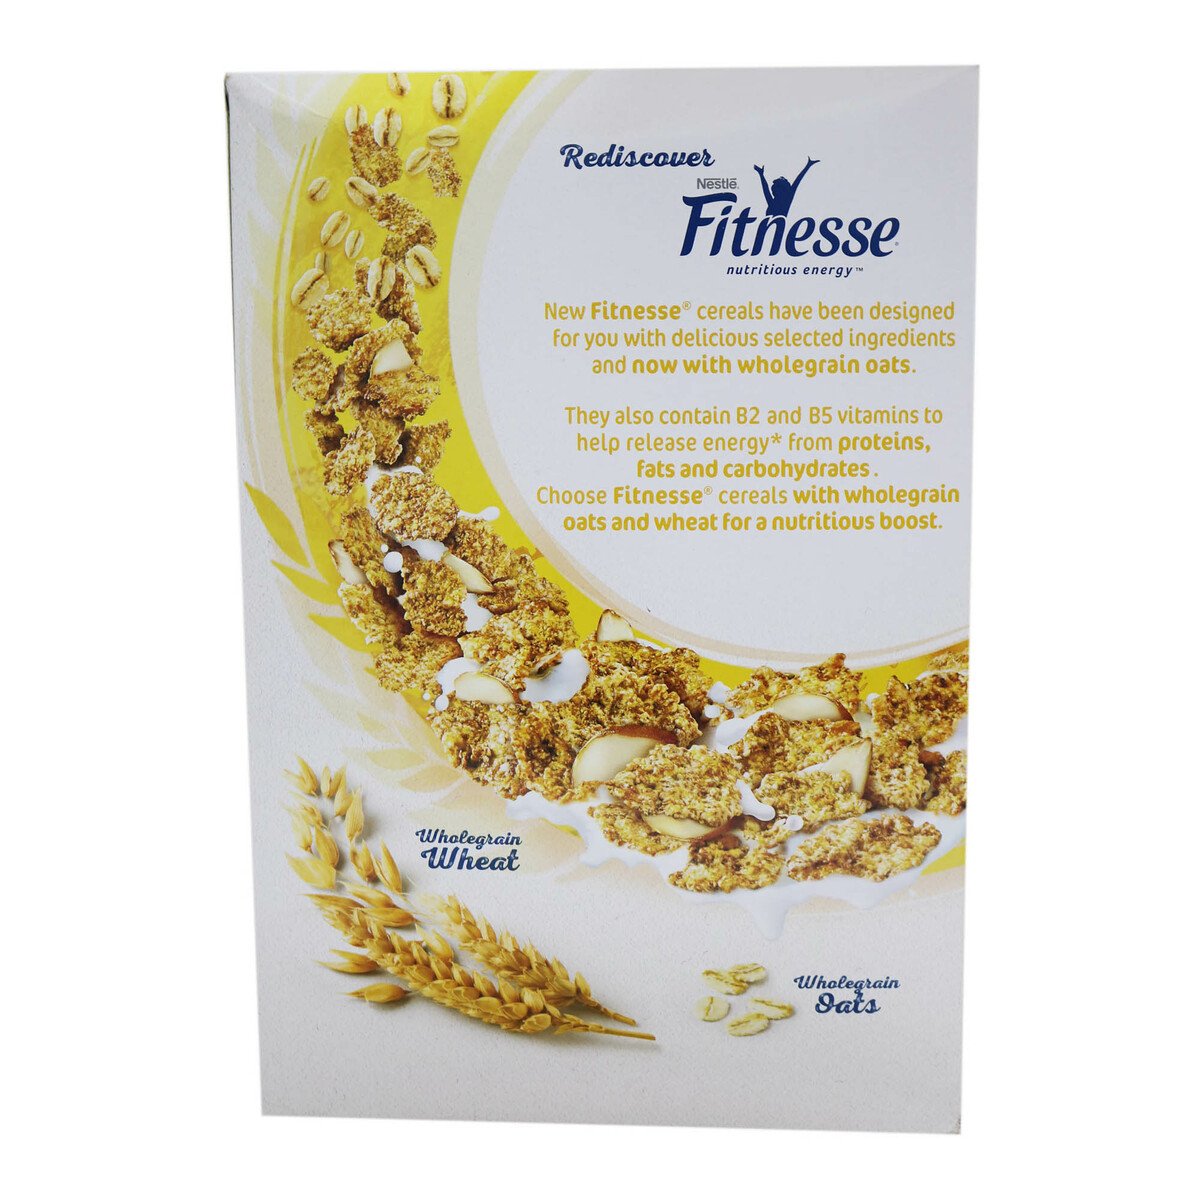 Fitnesse Honey & Almond Cereals 390g